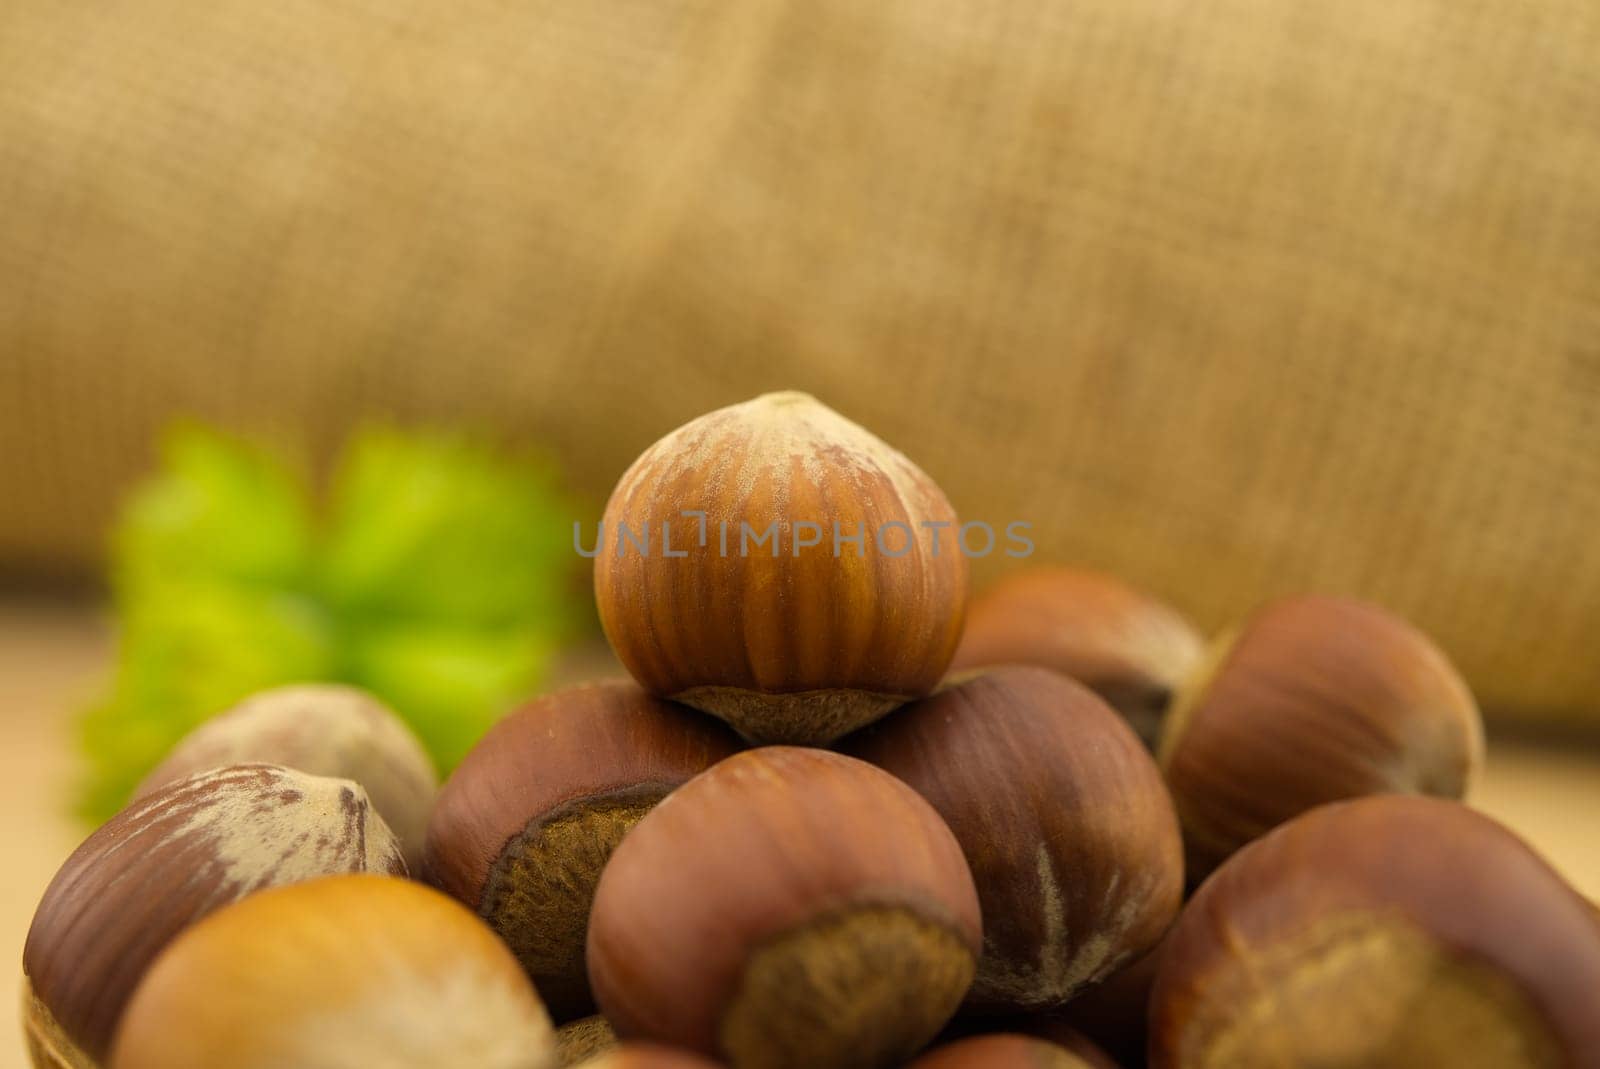 Fresh unshelled hazelnuts in front of the jute sack by NetPix